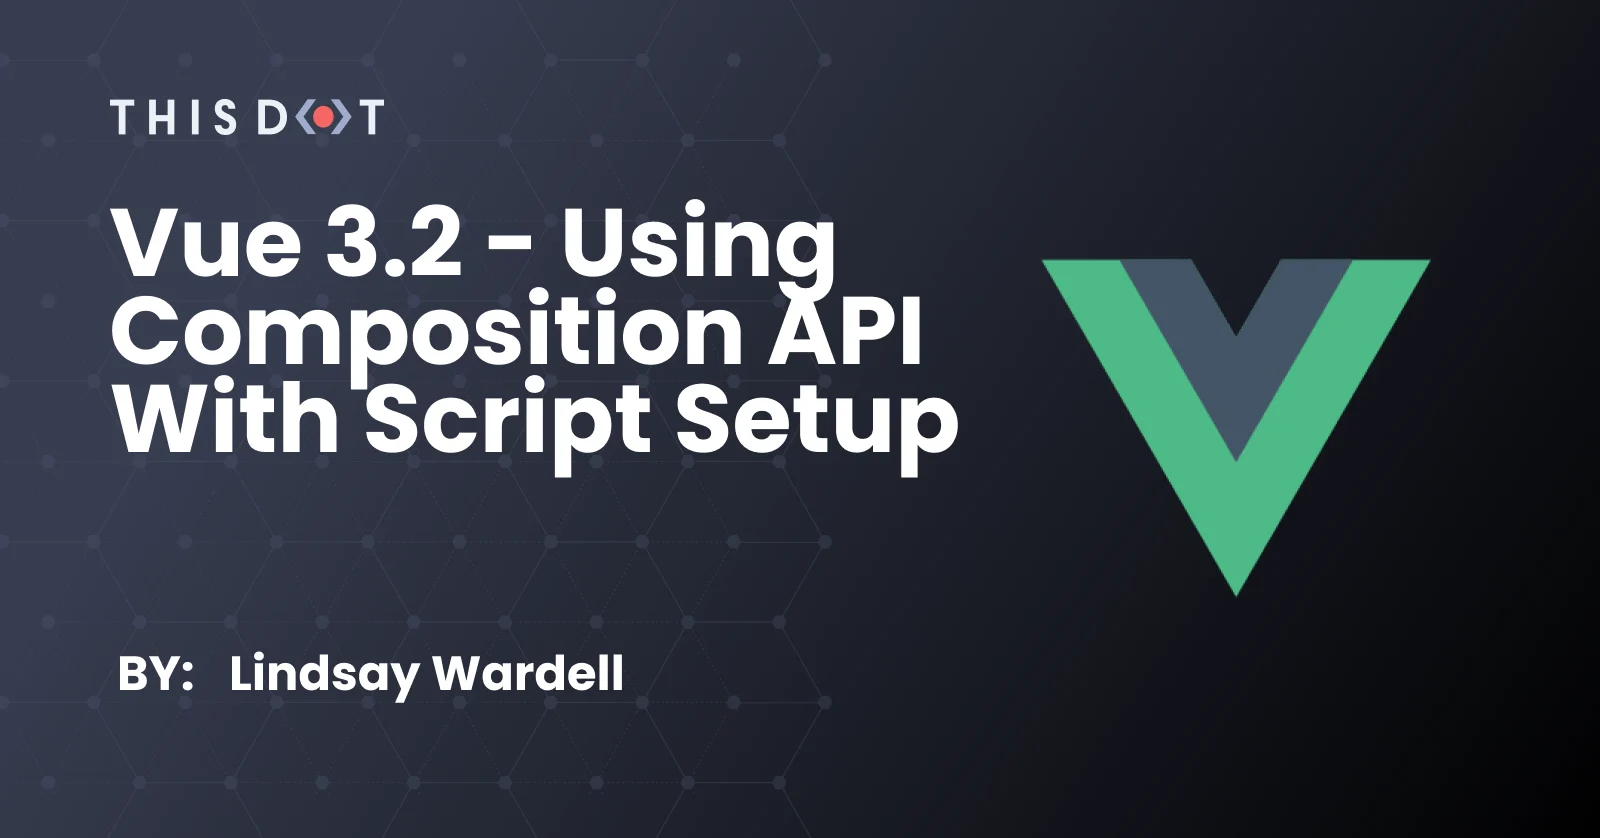 Vue 3.2 - Using Composition API with Script Setup cover image